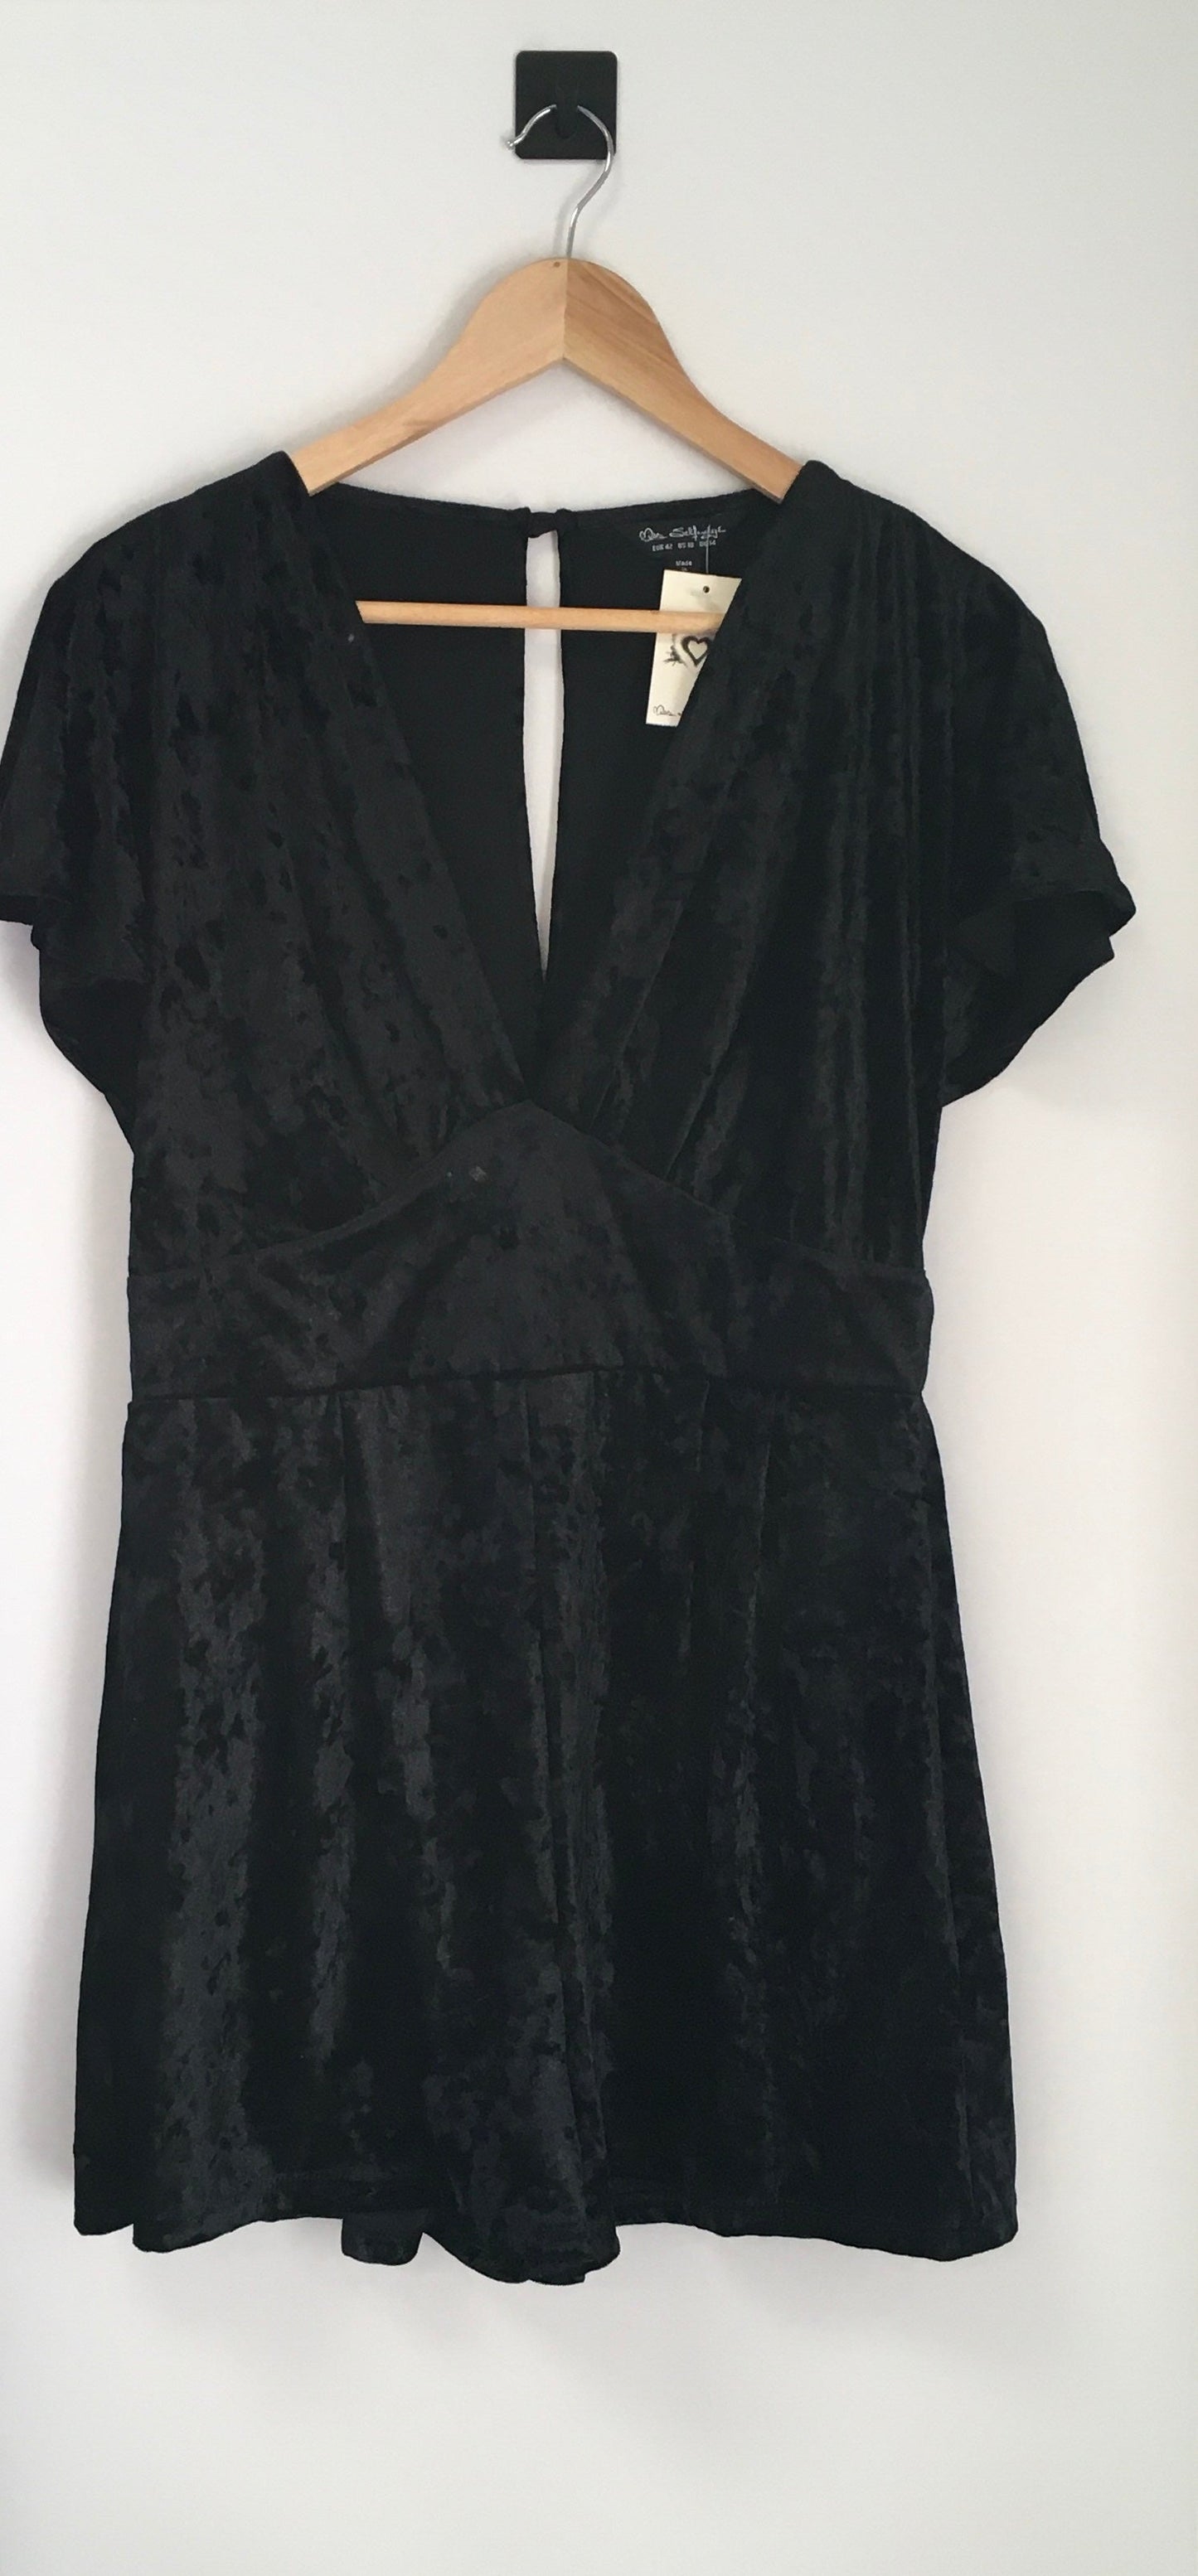 Dress Casual Short By Miss Selfridge Size: 10